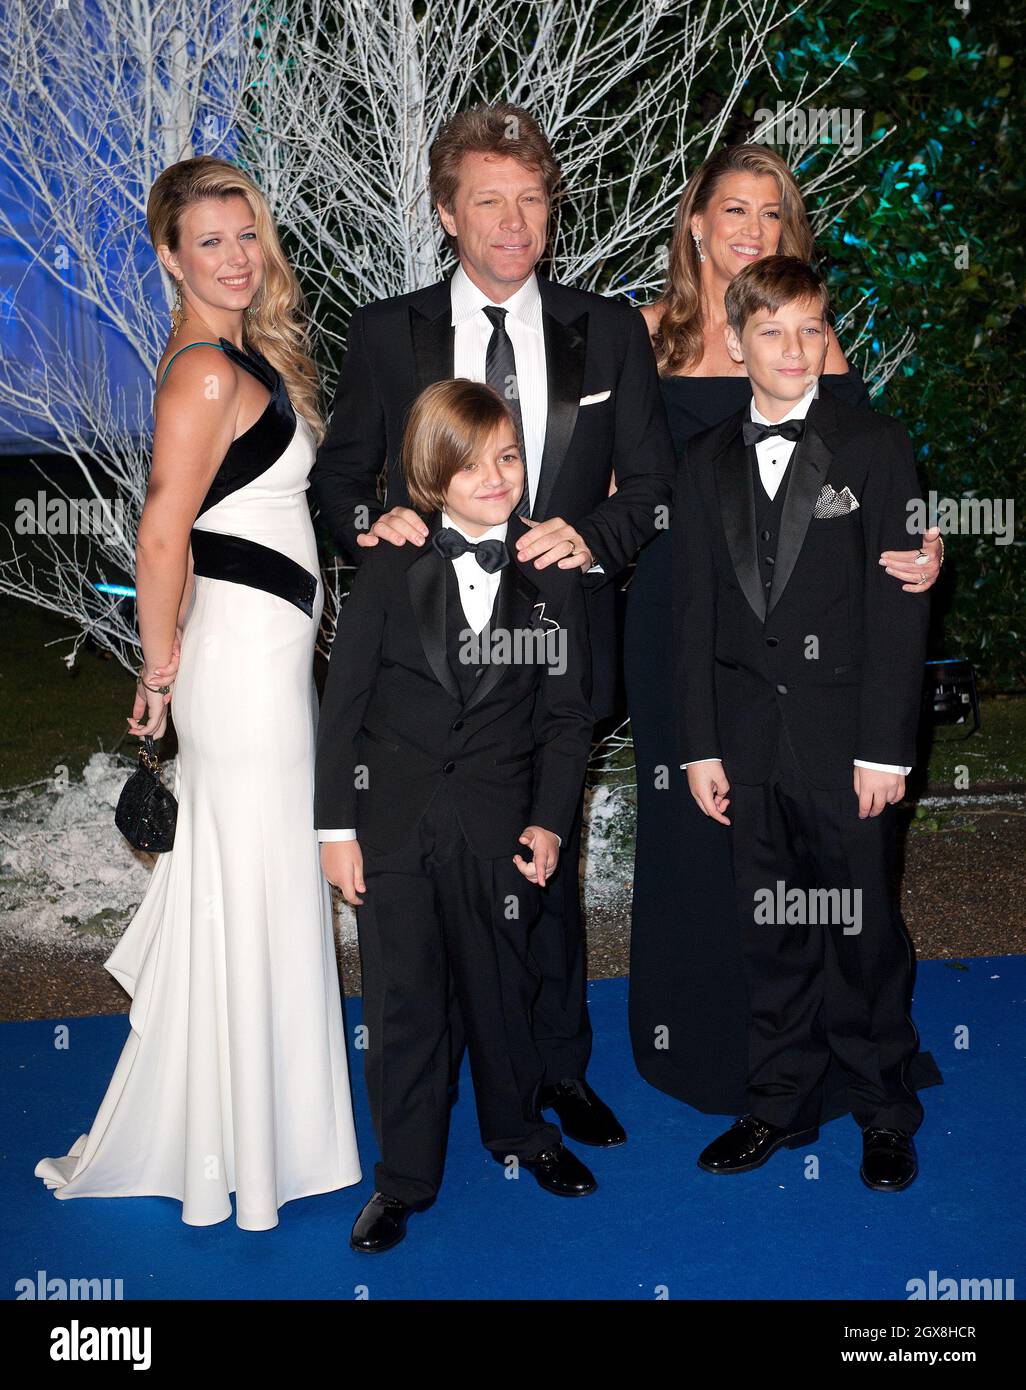 Jon Bon Jovi (centro), la moglie Dorothea Hurley (destra) e i bambini Stephanie, Romeo e Jacob arrivano per il Centrepoint Winter Whites Gala che si tiene a Kensington Palace, Londra. Foto Stock